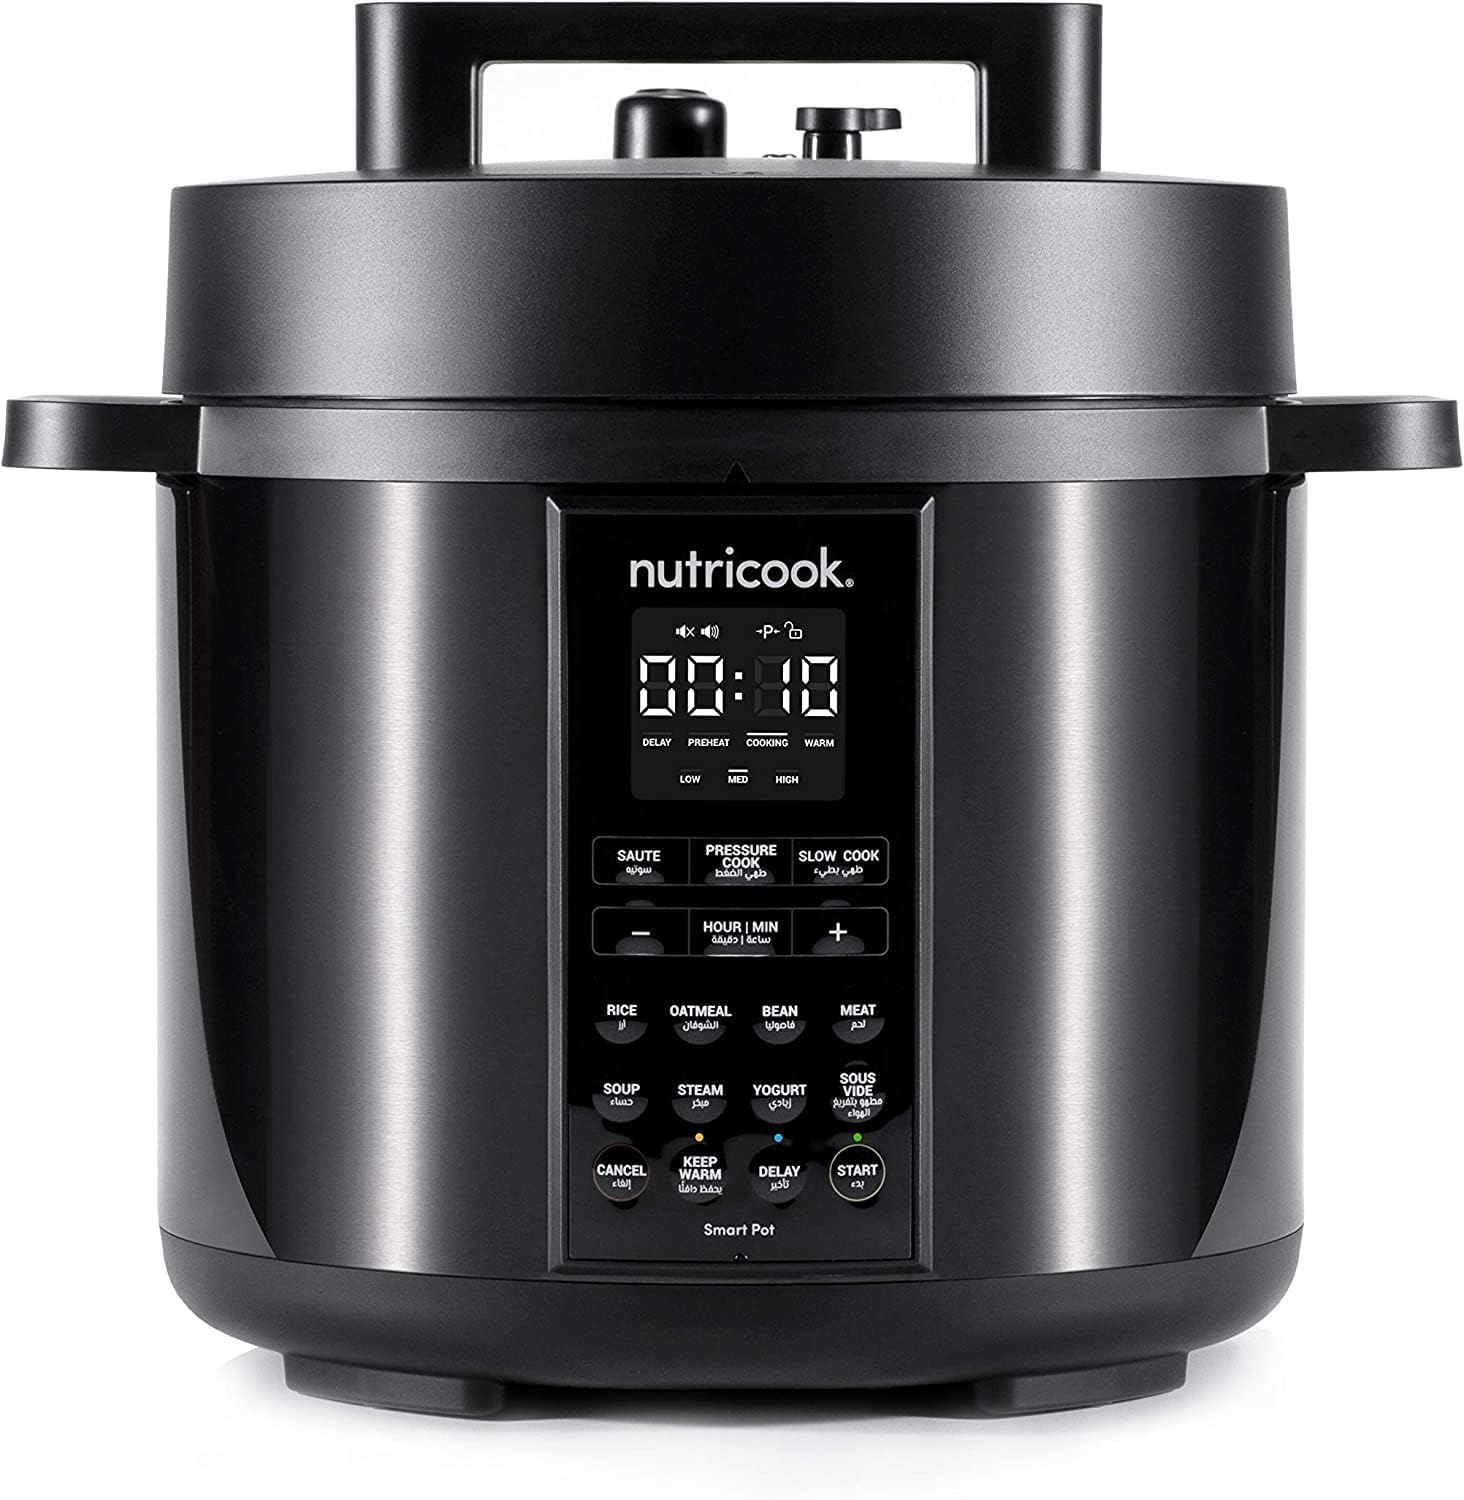 Nutricook Smart Pot 2, 8 Liters, 9 In 1 Electric Pressure Cooker, Slow Cooker, Rice Cooker, Steamer, Sauté Pot, Yogurt Maker & More, 12 Smart Programs With New Smart Lid, 1 Years Warranty